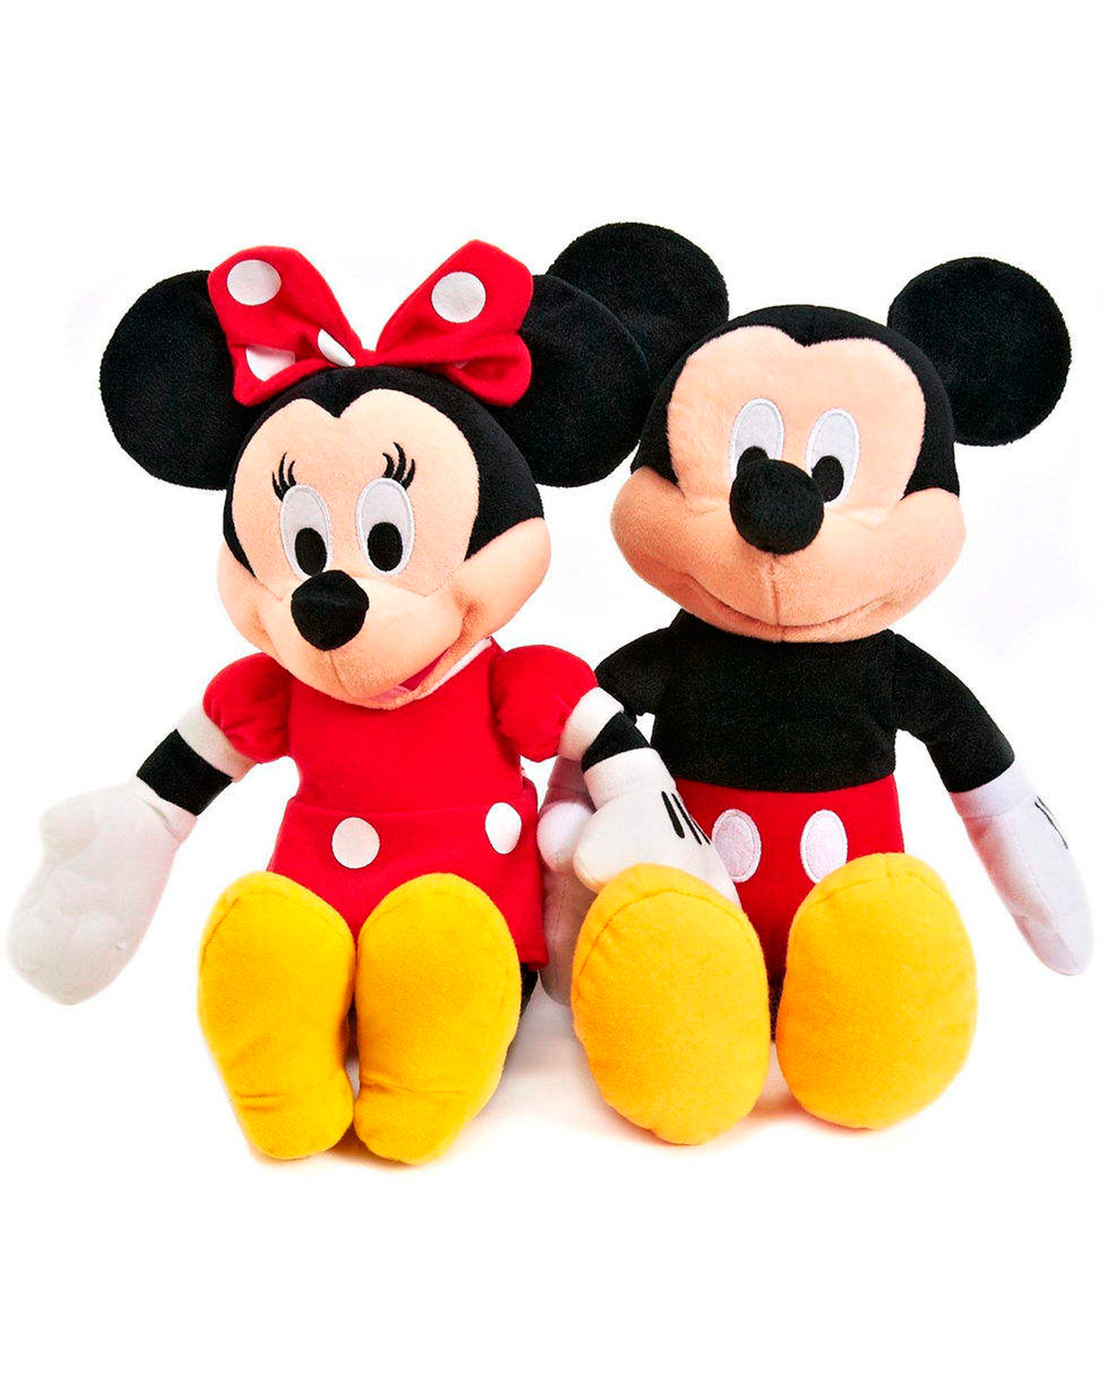 Мягкие игрушки Микки и Минни Маус Mickey Minnie Mouse, 2 шт. 120 см